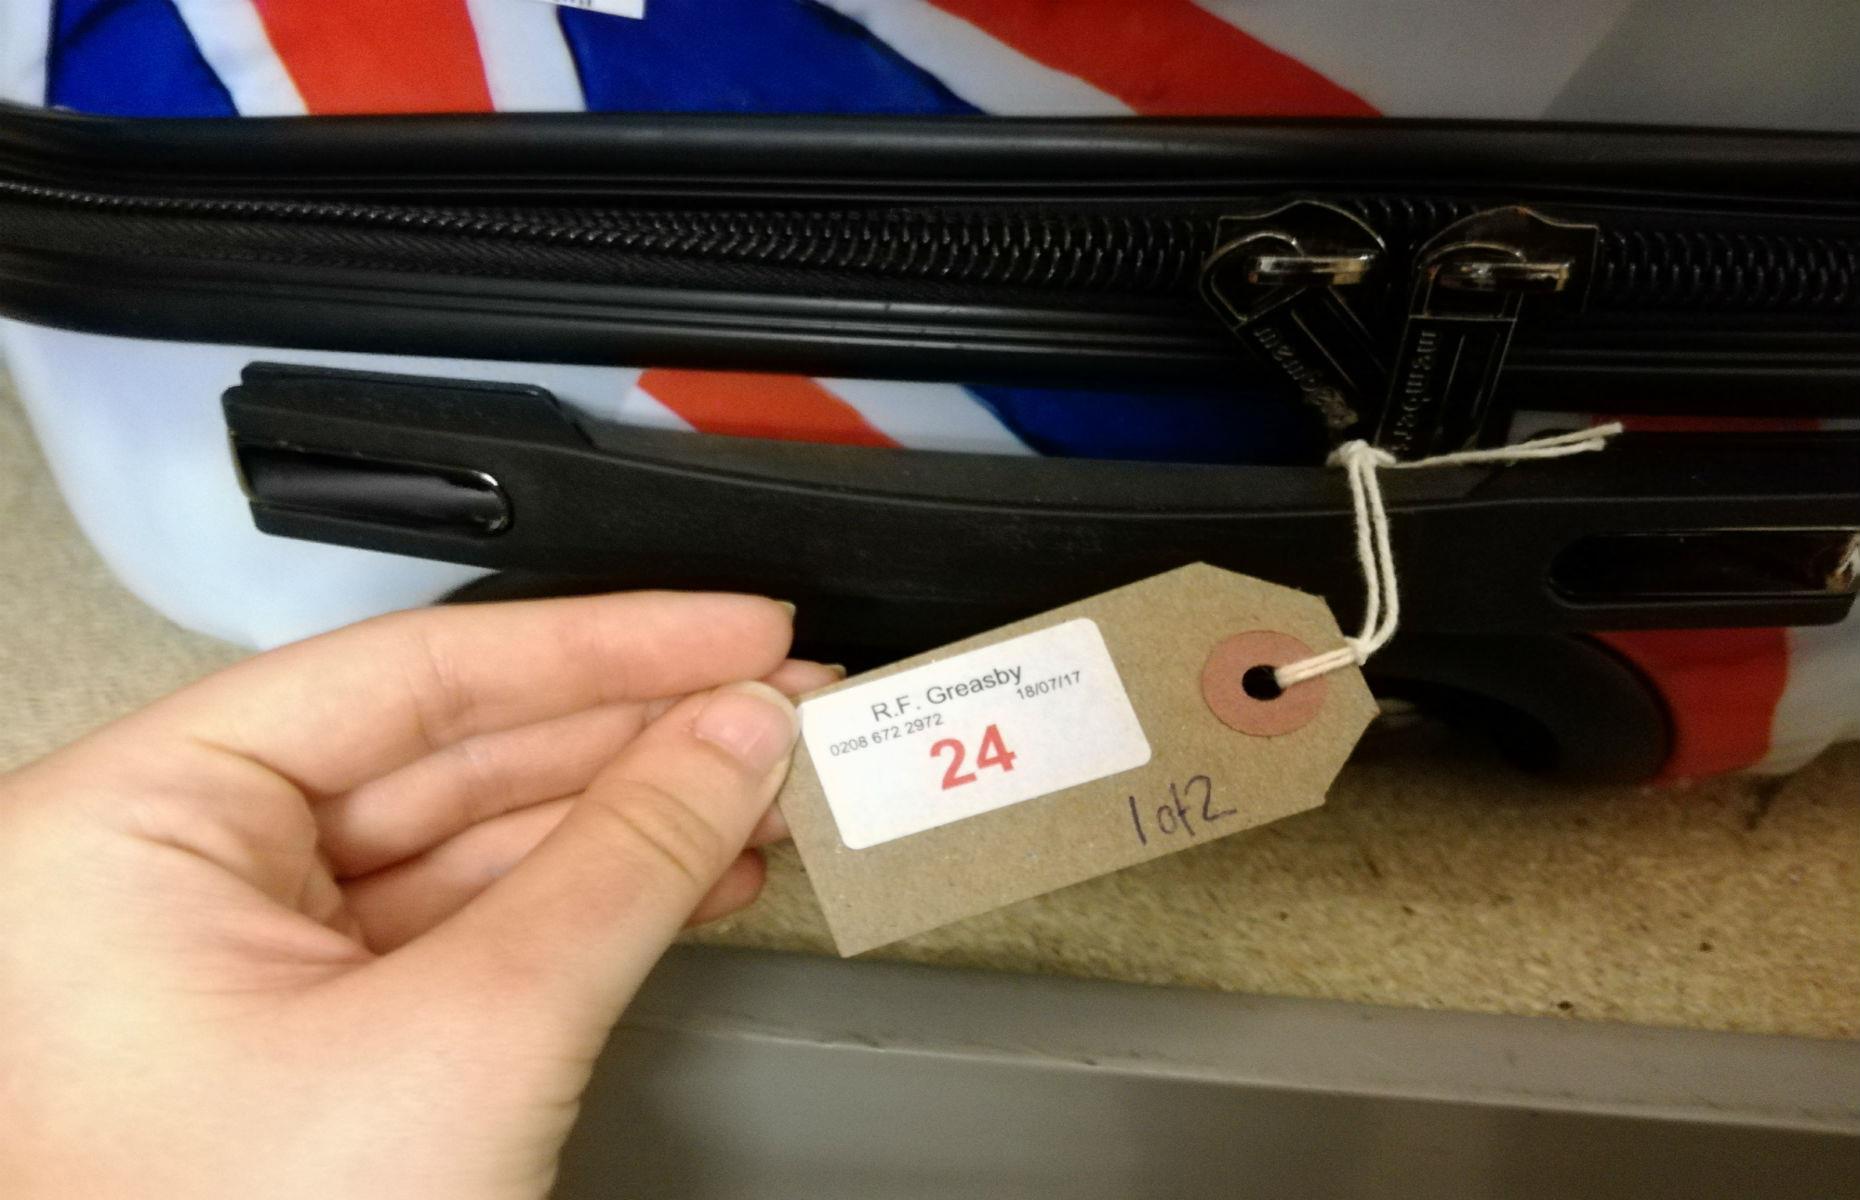 Luggage label